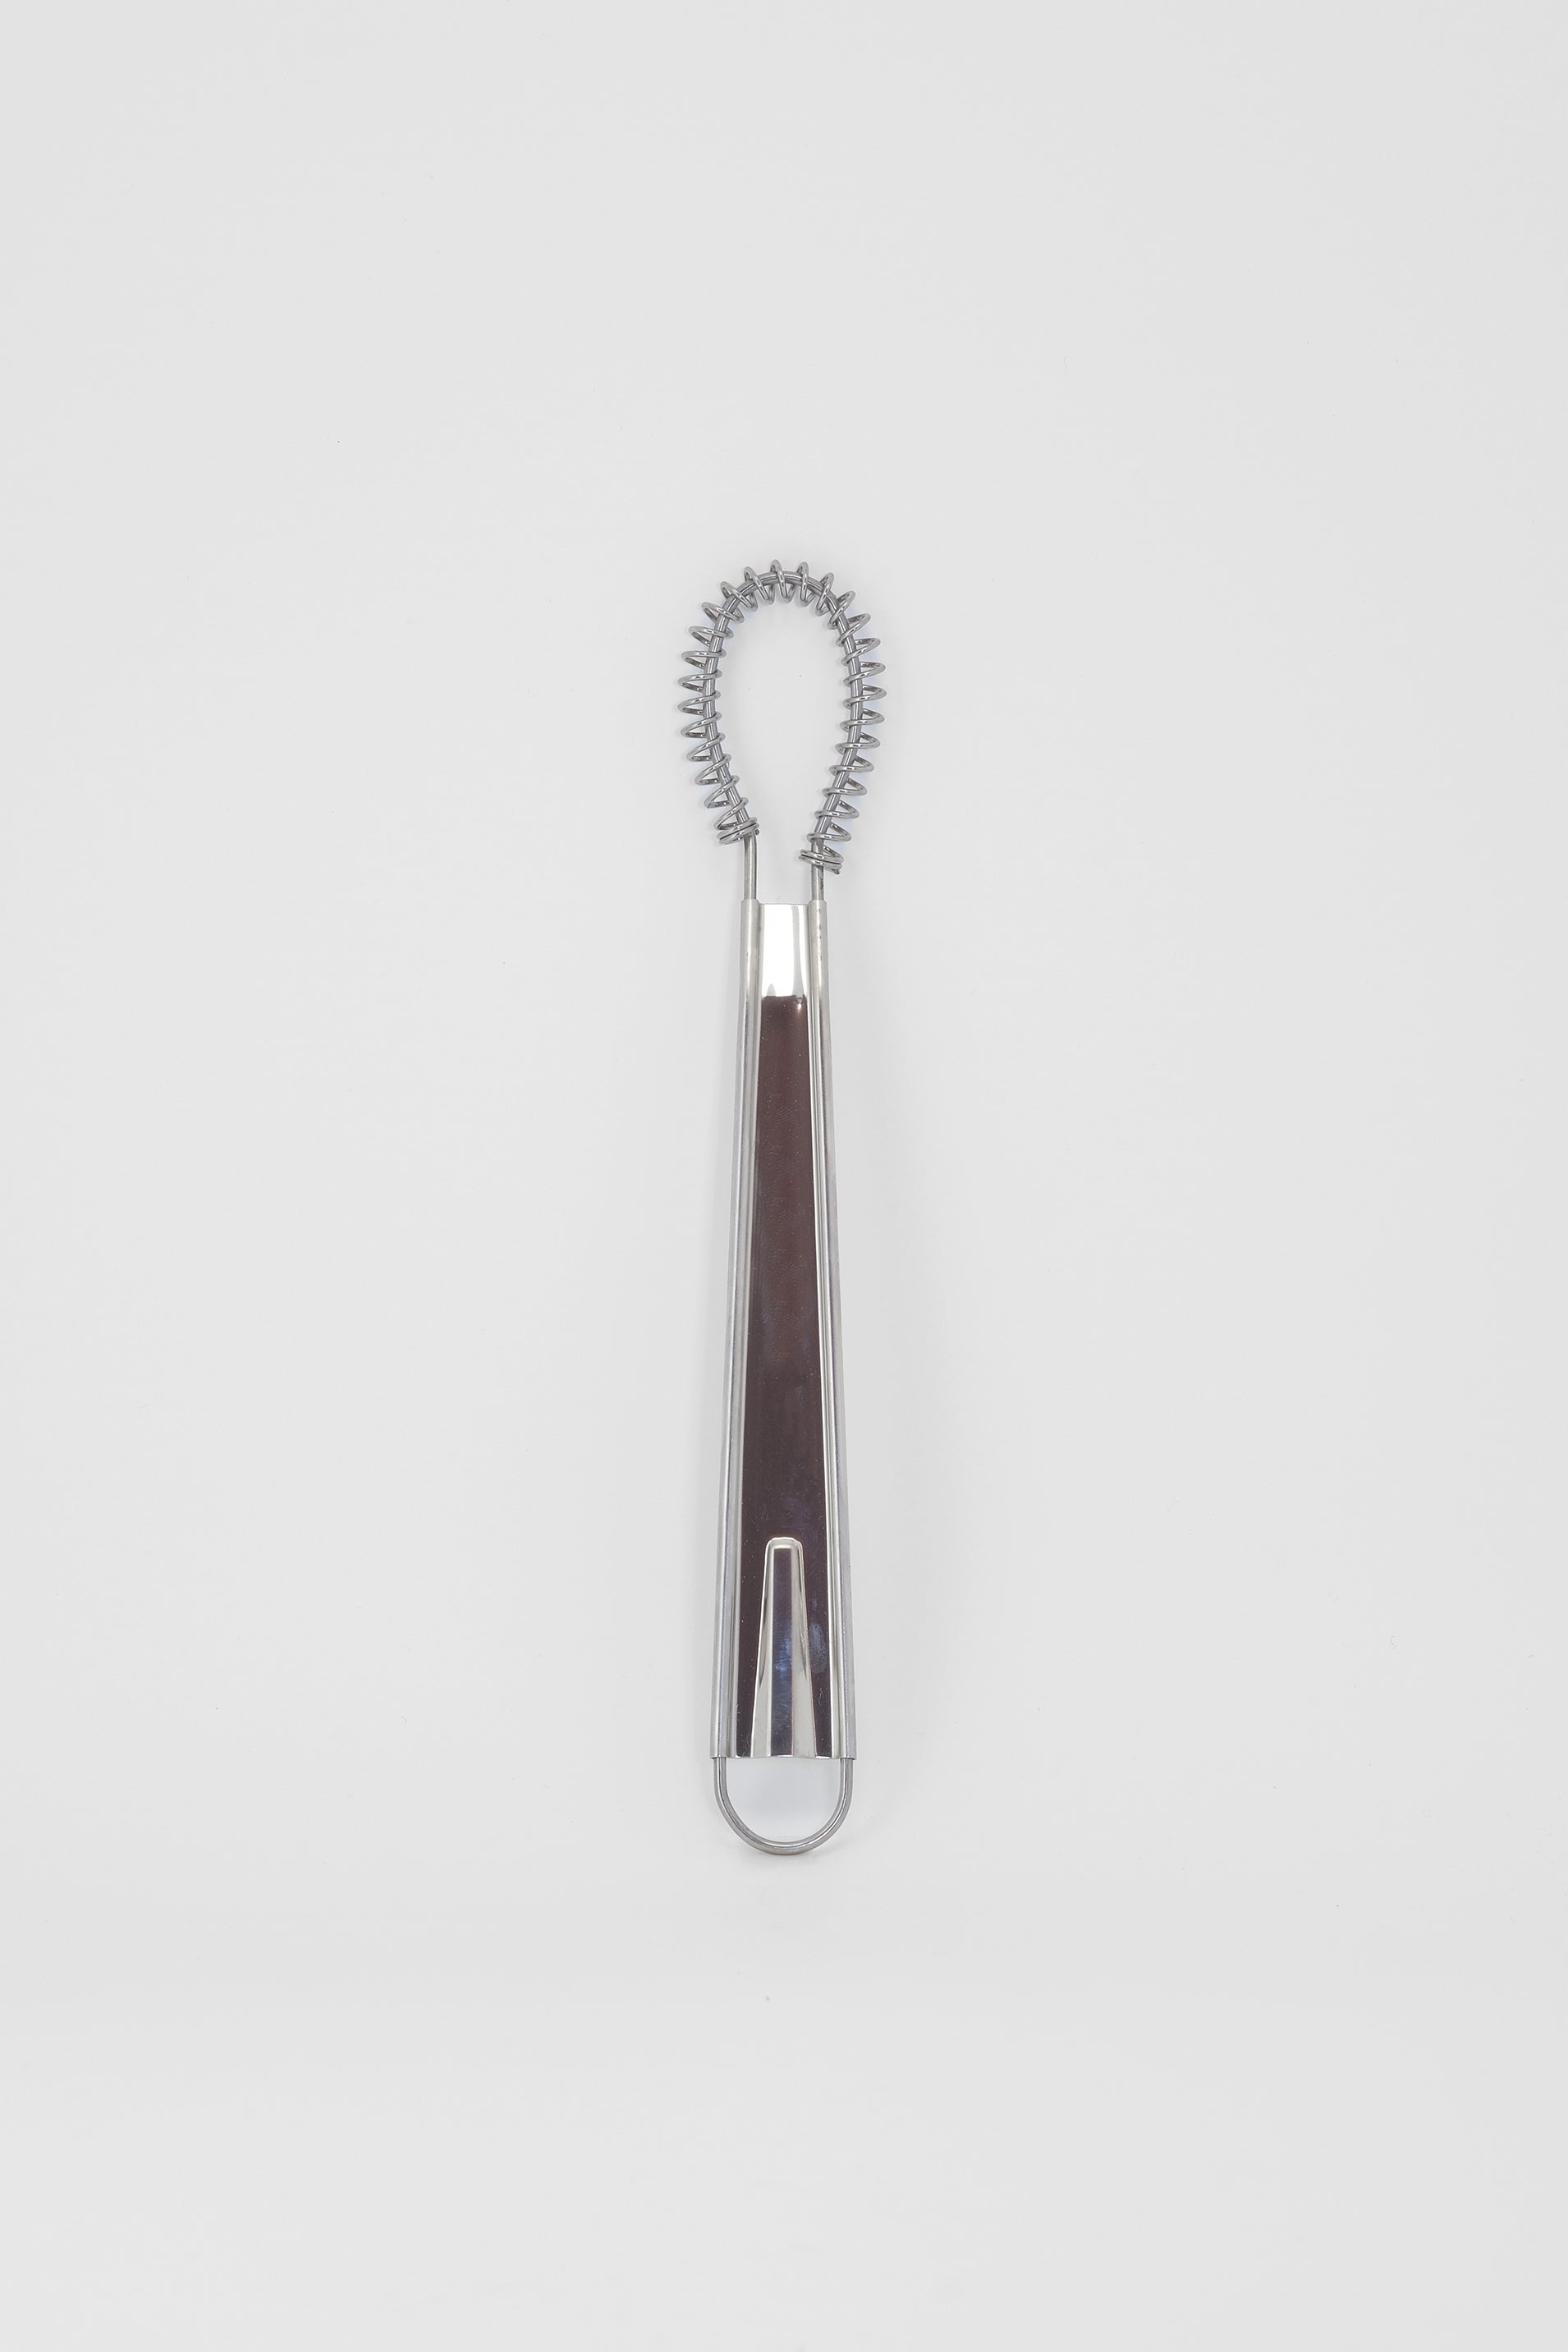 Spoon whisk-Inox-KIOSK48TH